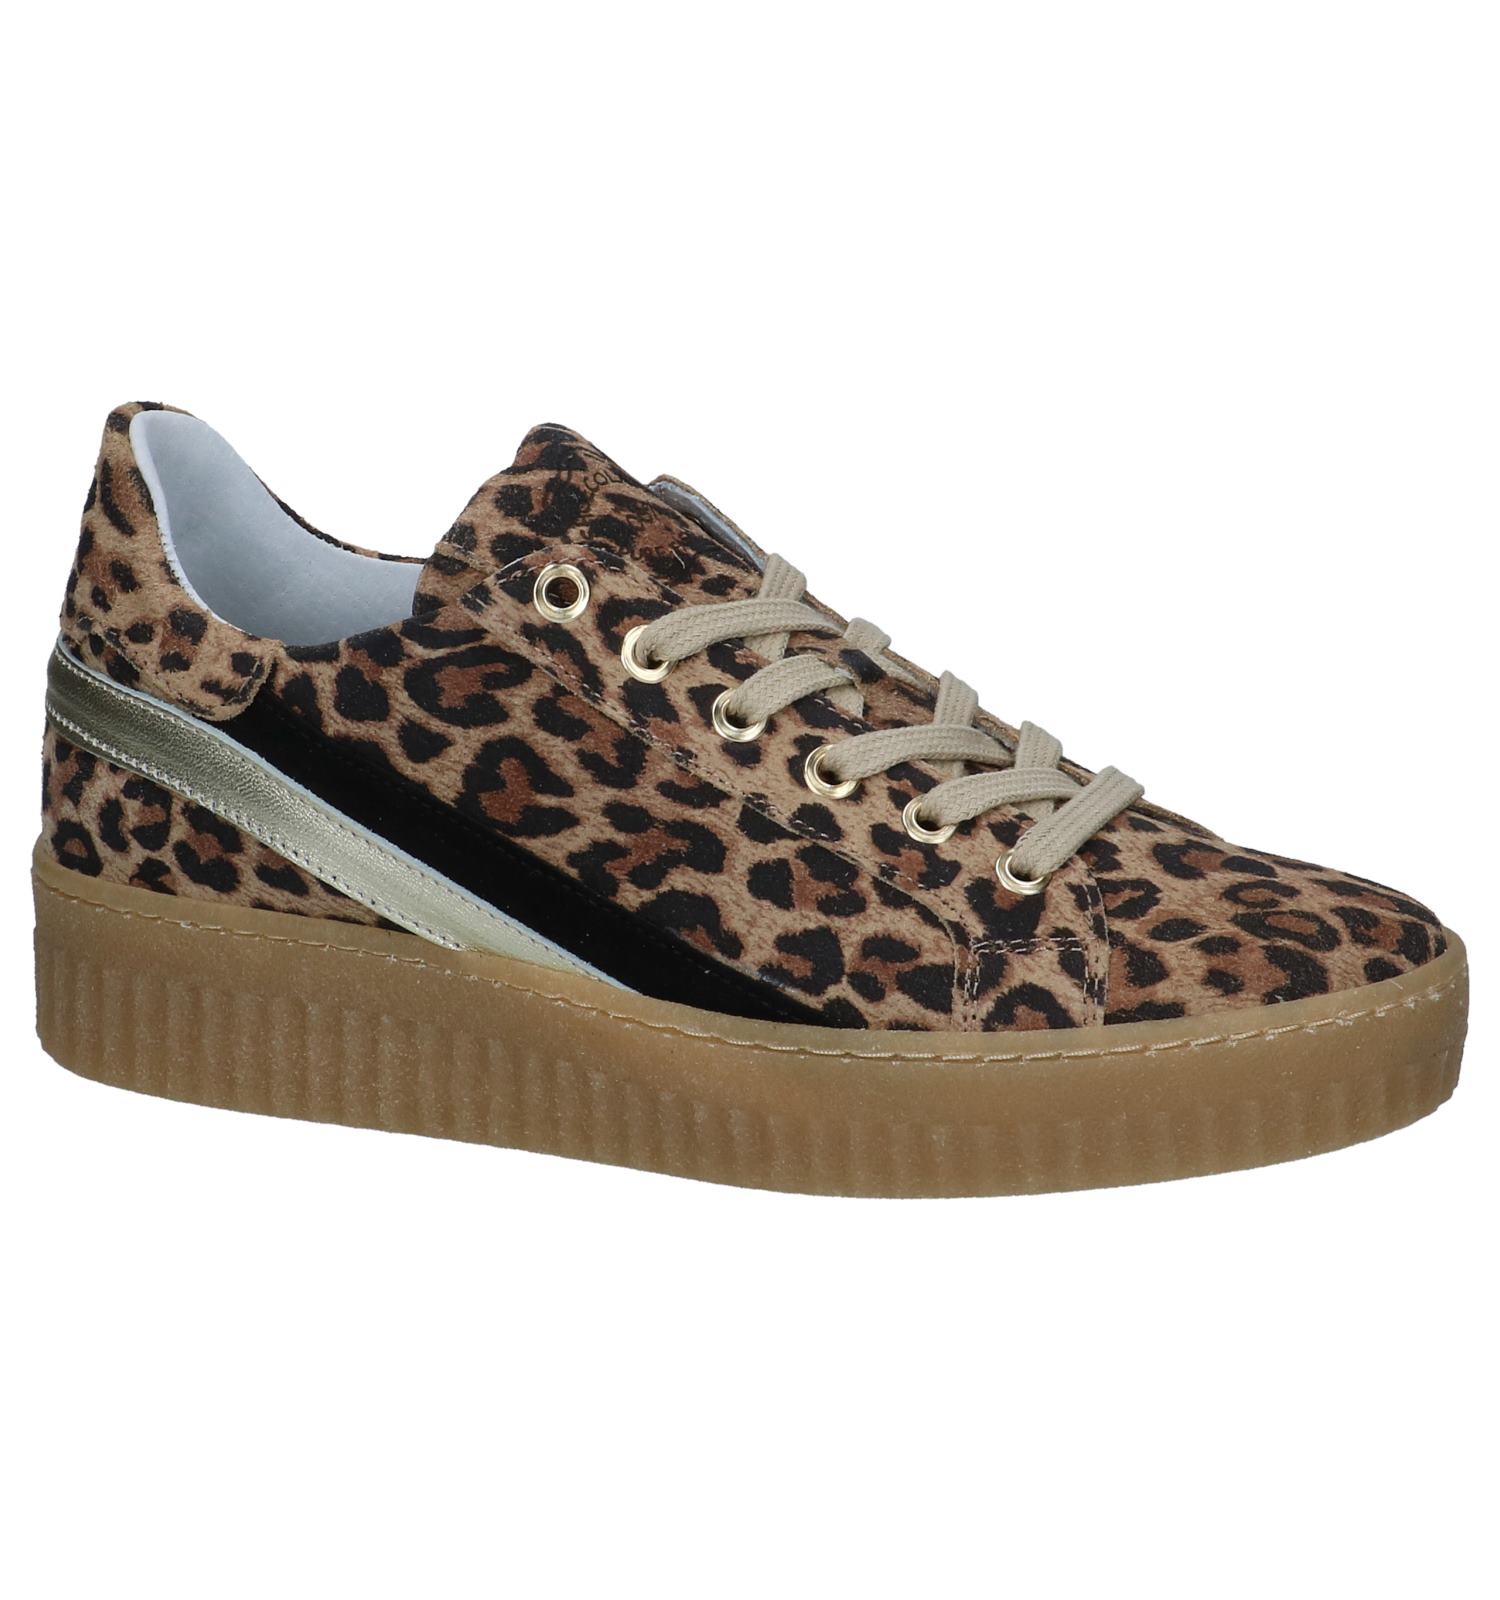 Ongebruikt Bruine Shoecolate Sneakers met Luipaardprint | TORFS.BE | Gratis RN-83